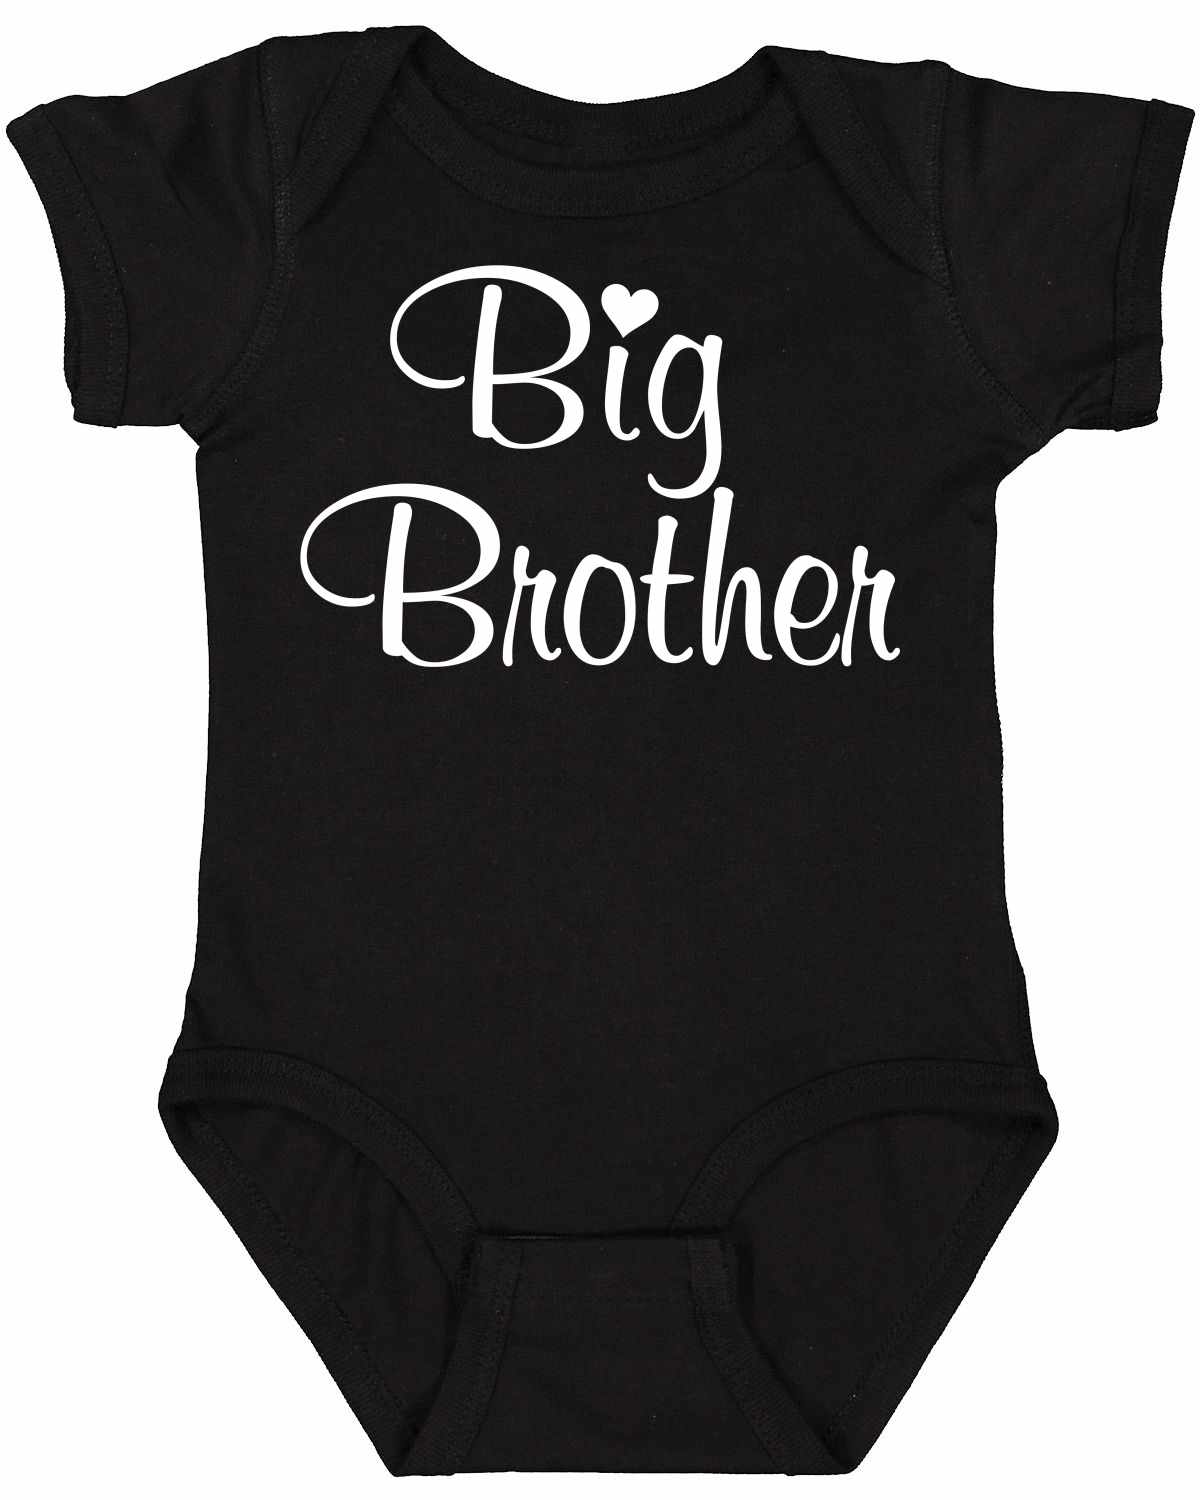 Big Brother on Infant BodySuit (#1344-10)